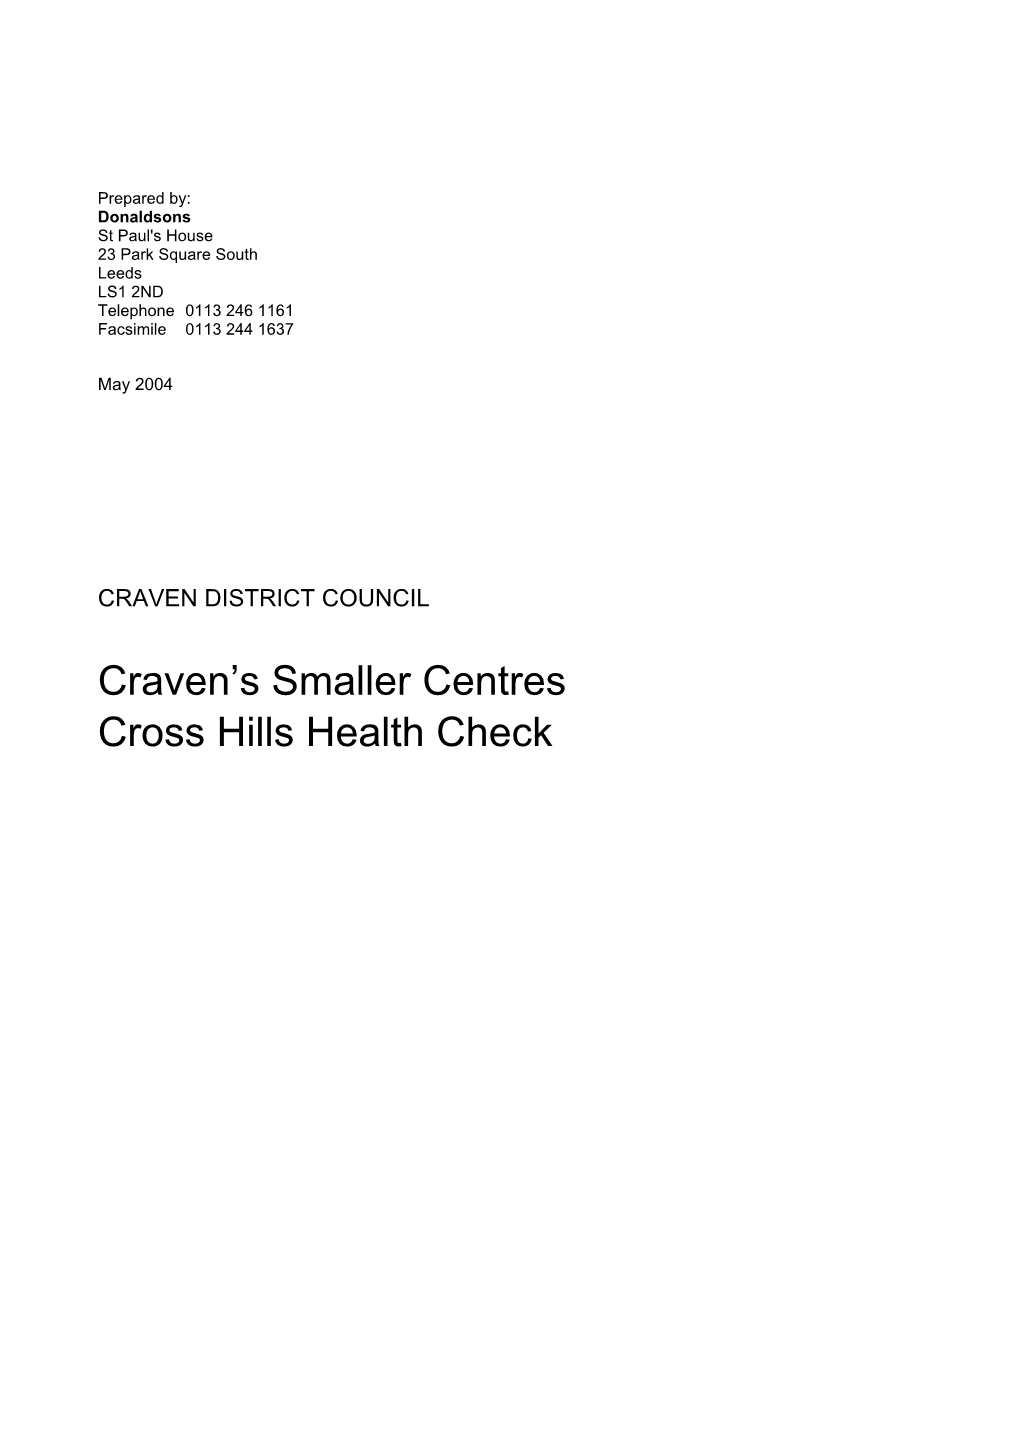 Craven's Smaller Centres Cross Hills Health Check